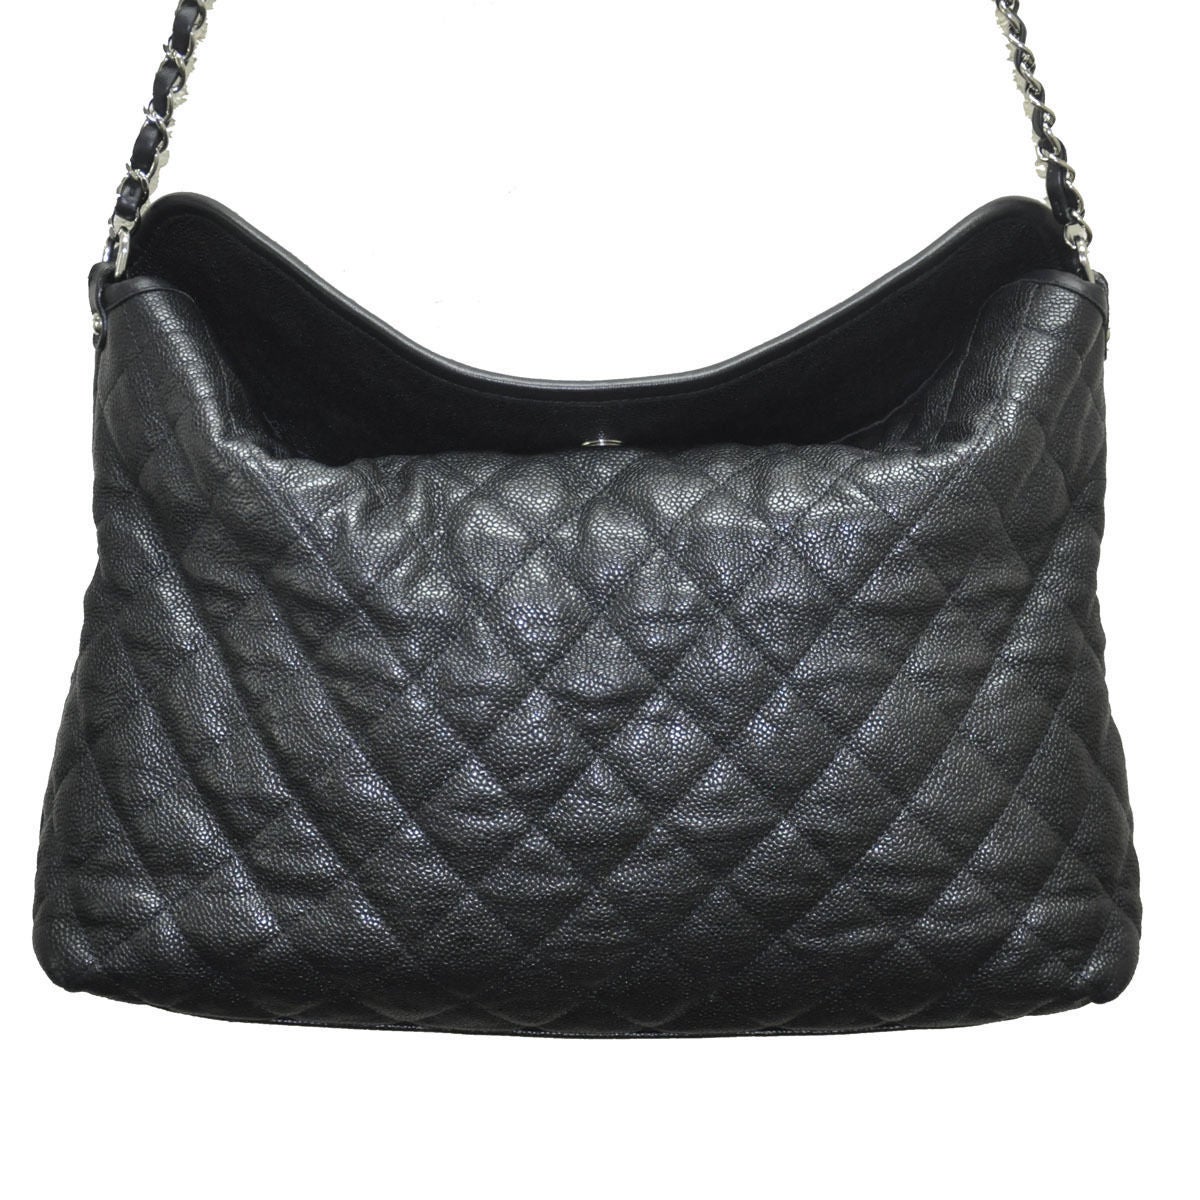 Chanel Black Caviar Leather French Riviera Hobo Shoulder Bag Handbag In Good Condition For Sale In Boca Raton, FL